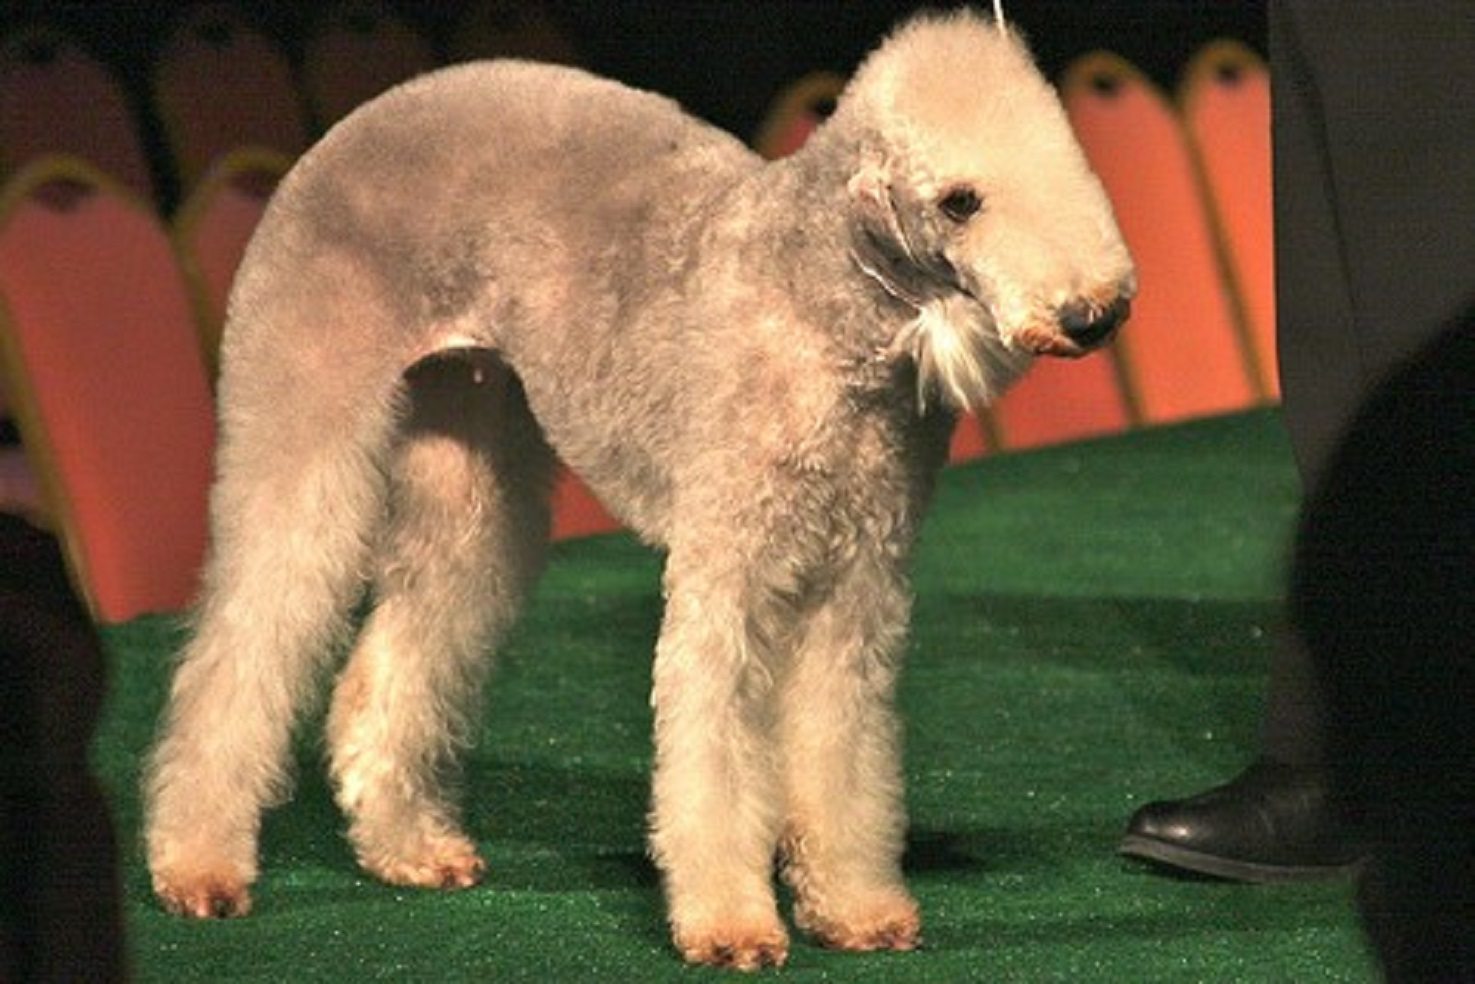 Bedlington terrier as apartment dog